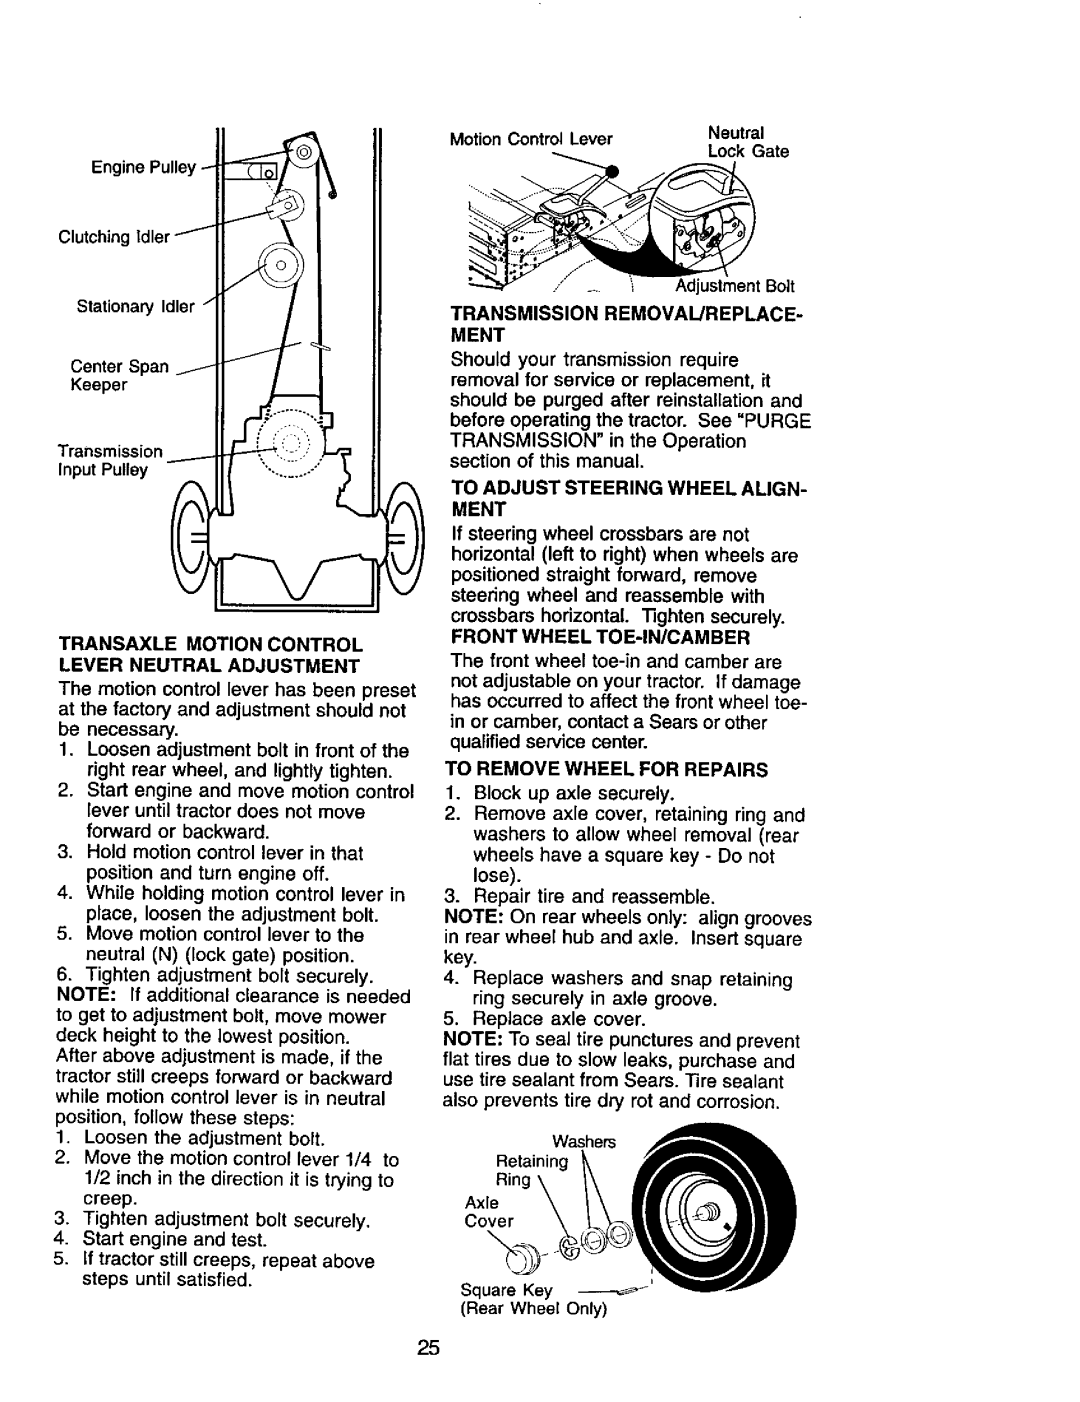 Craftsman 917.272068 owner manual To Adjust Steering Wheel Align- Ment, Cover 